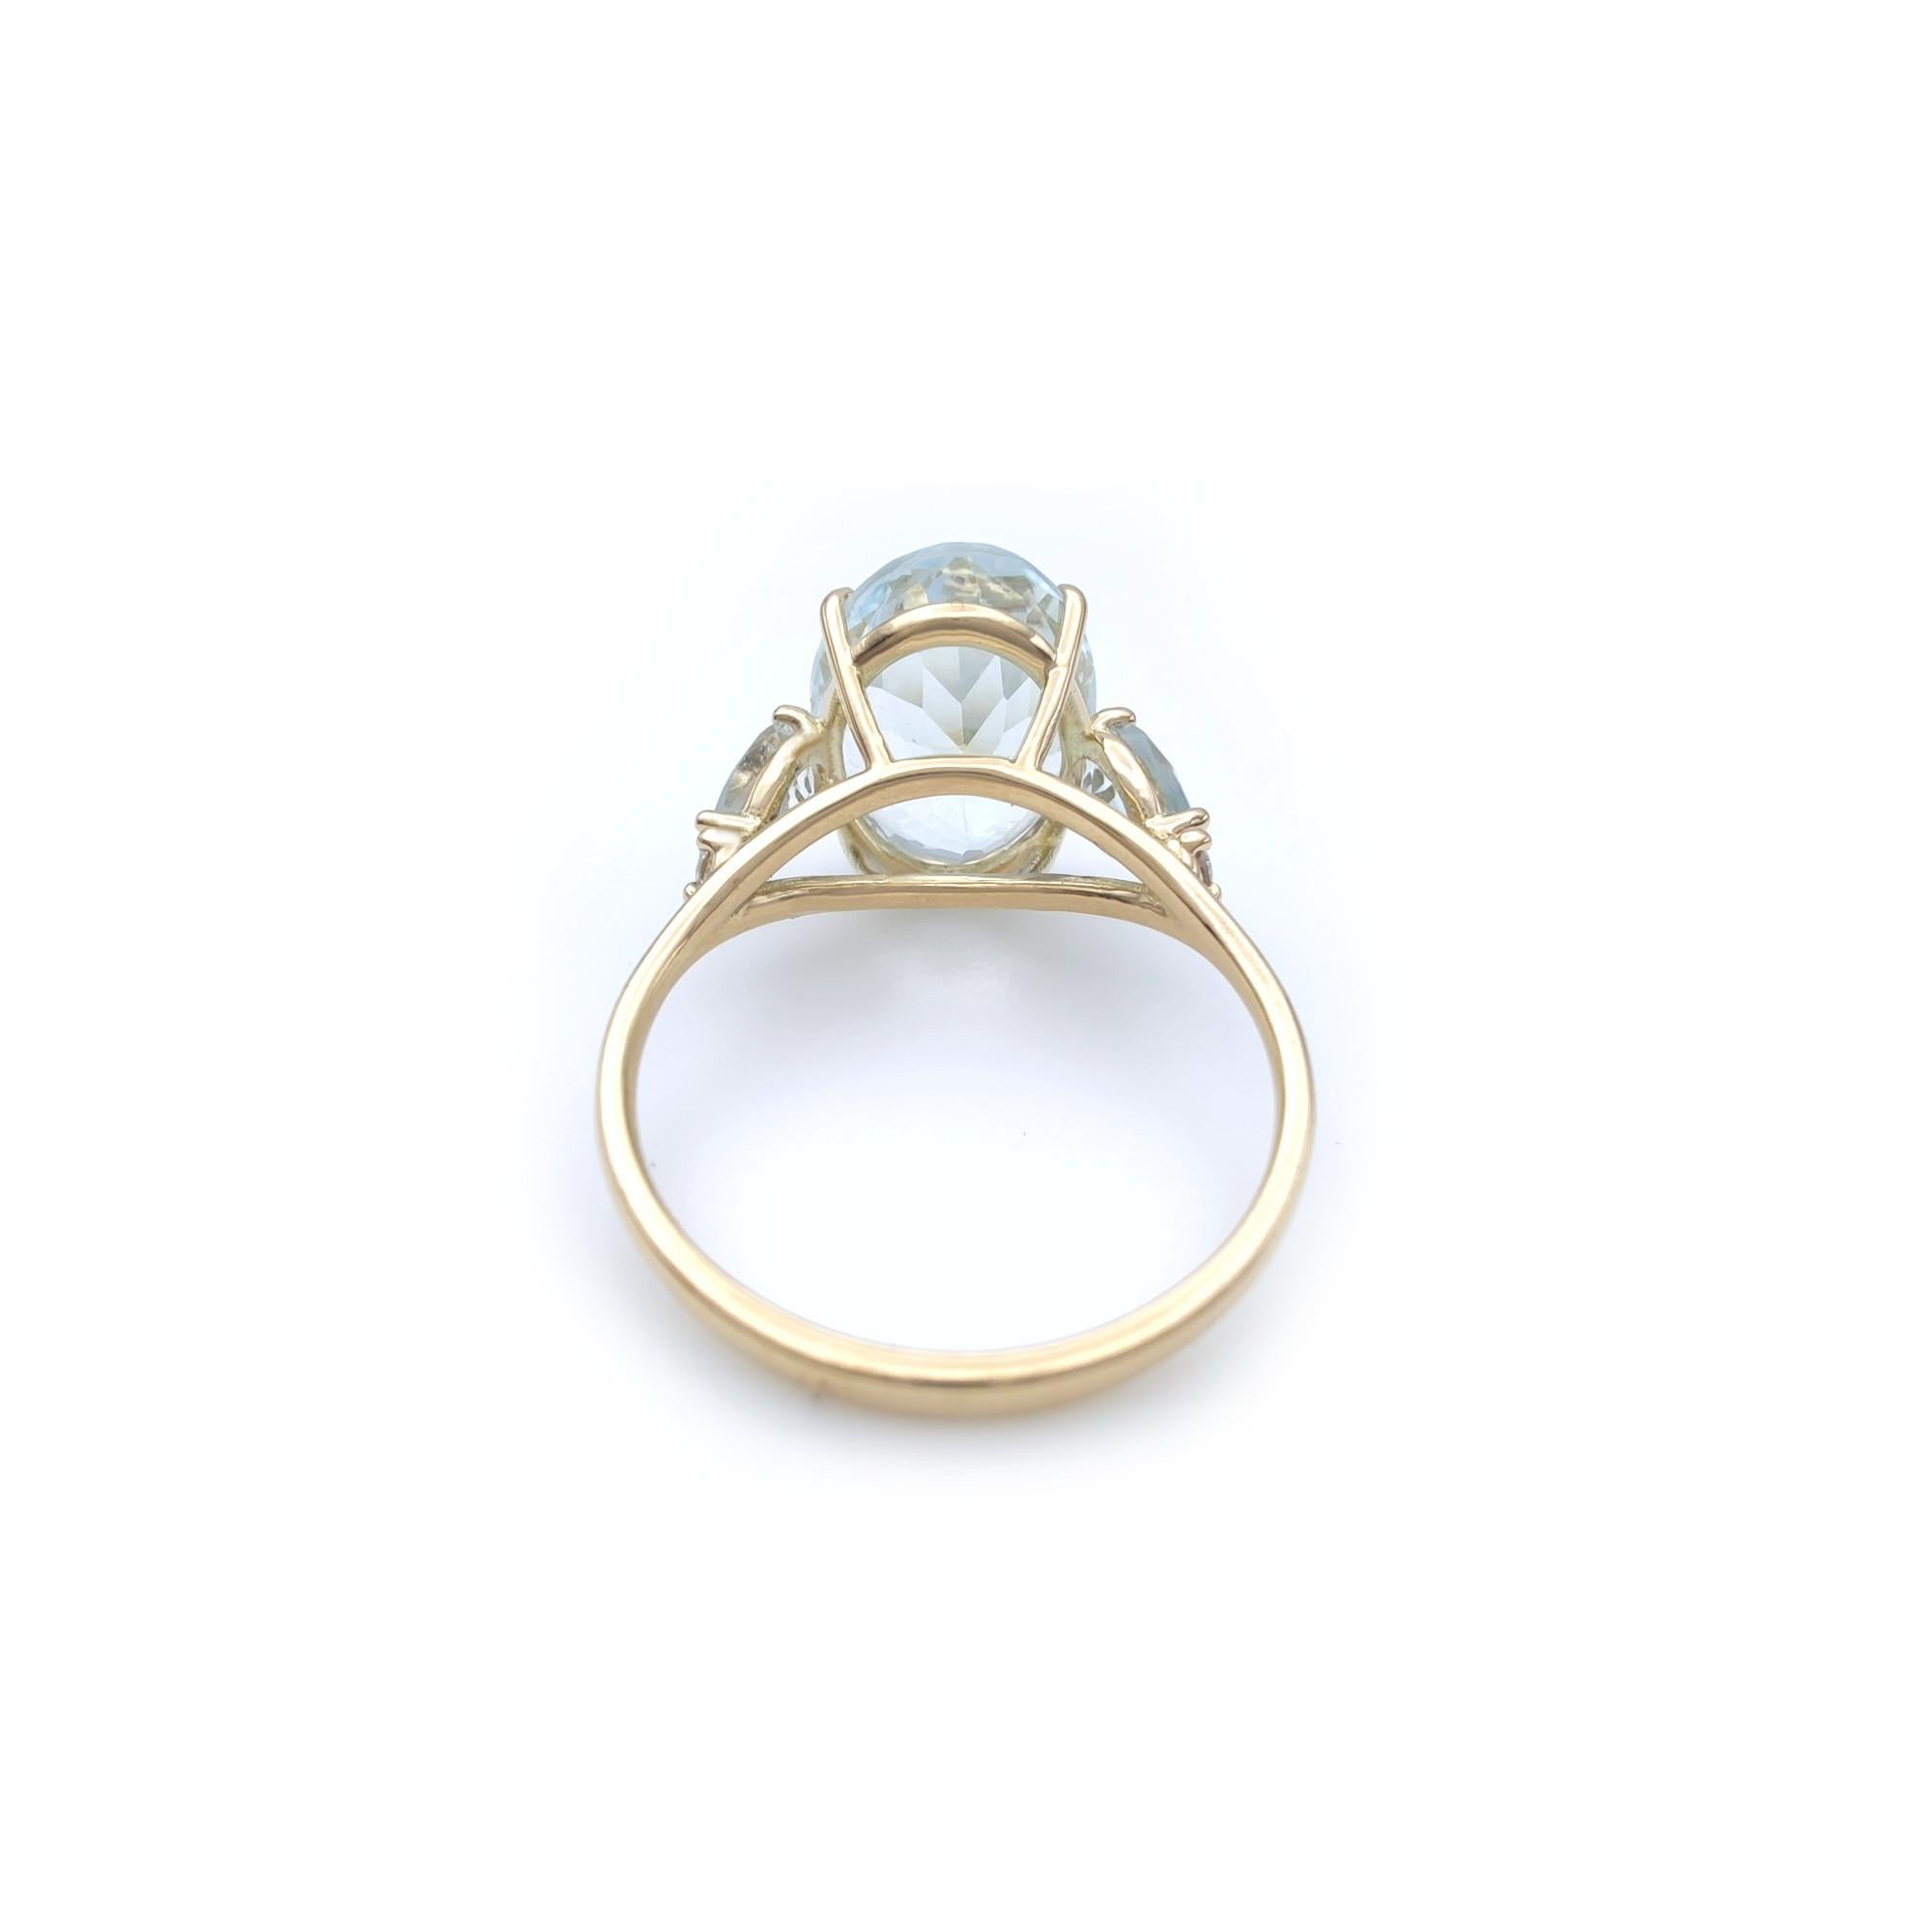 4.3ct  Oval Cut  Aquamarine  Ring, 18k Yellow Gold, with diamonds  4